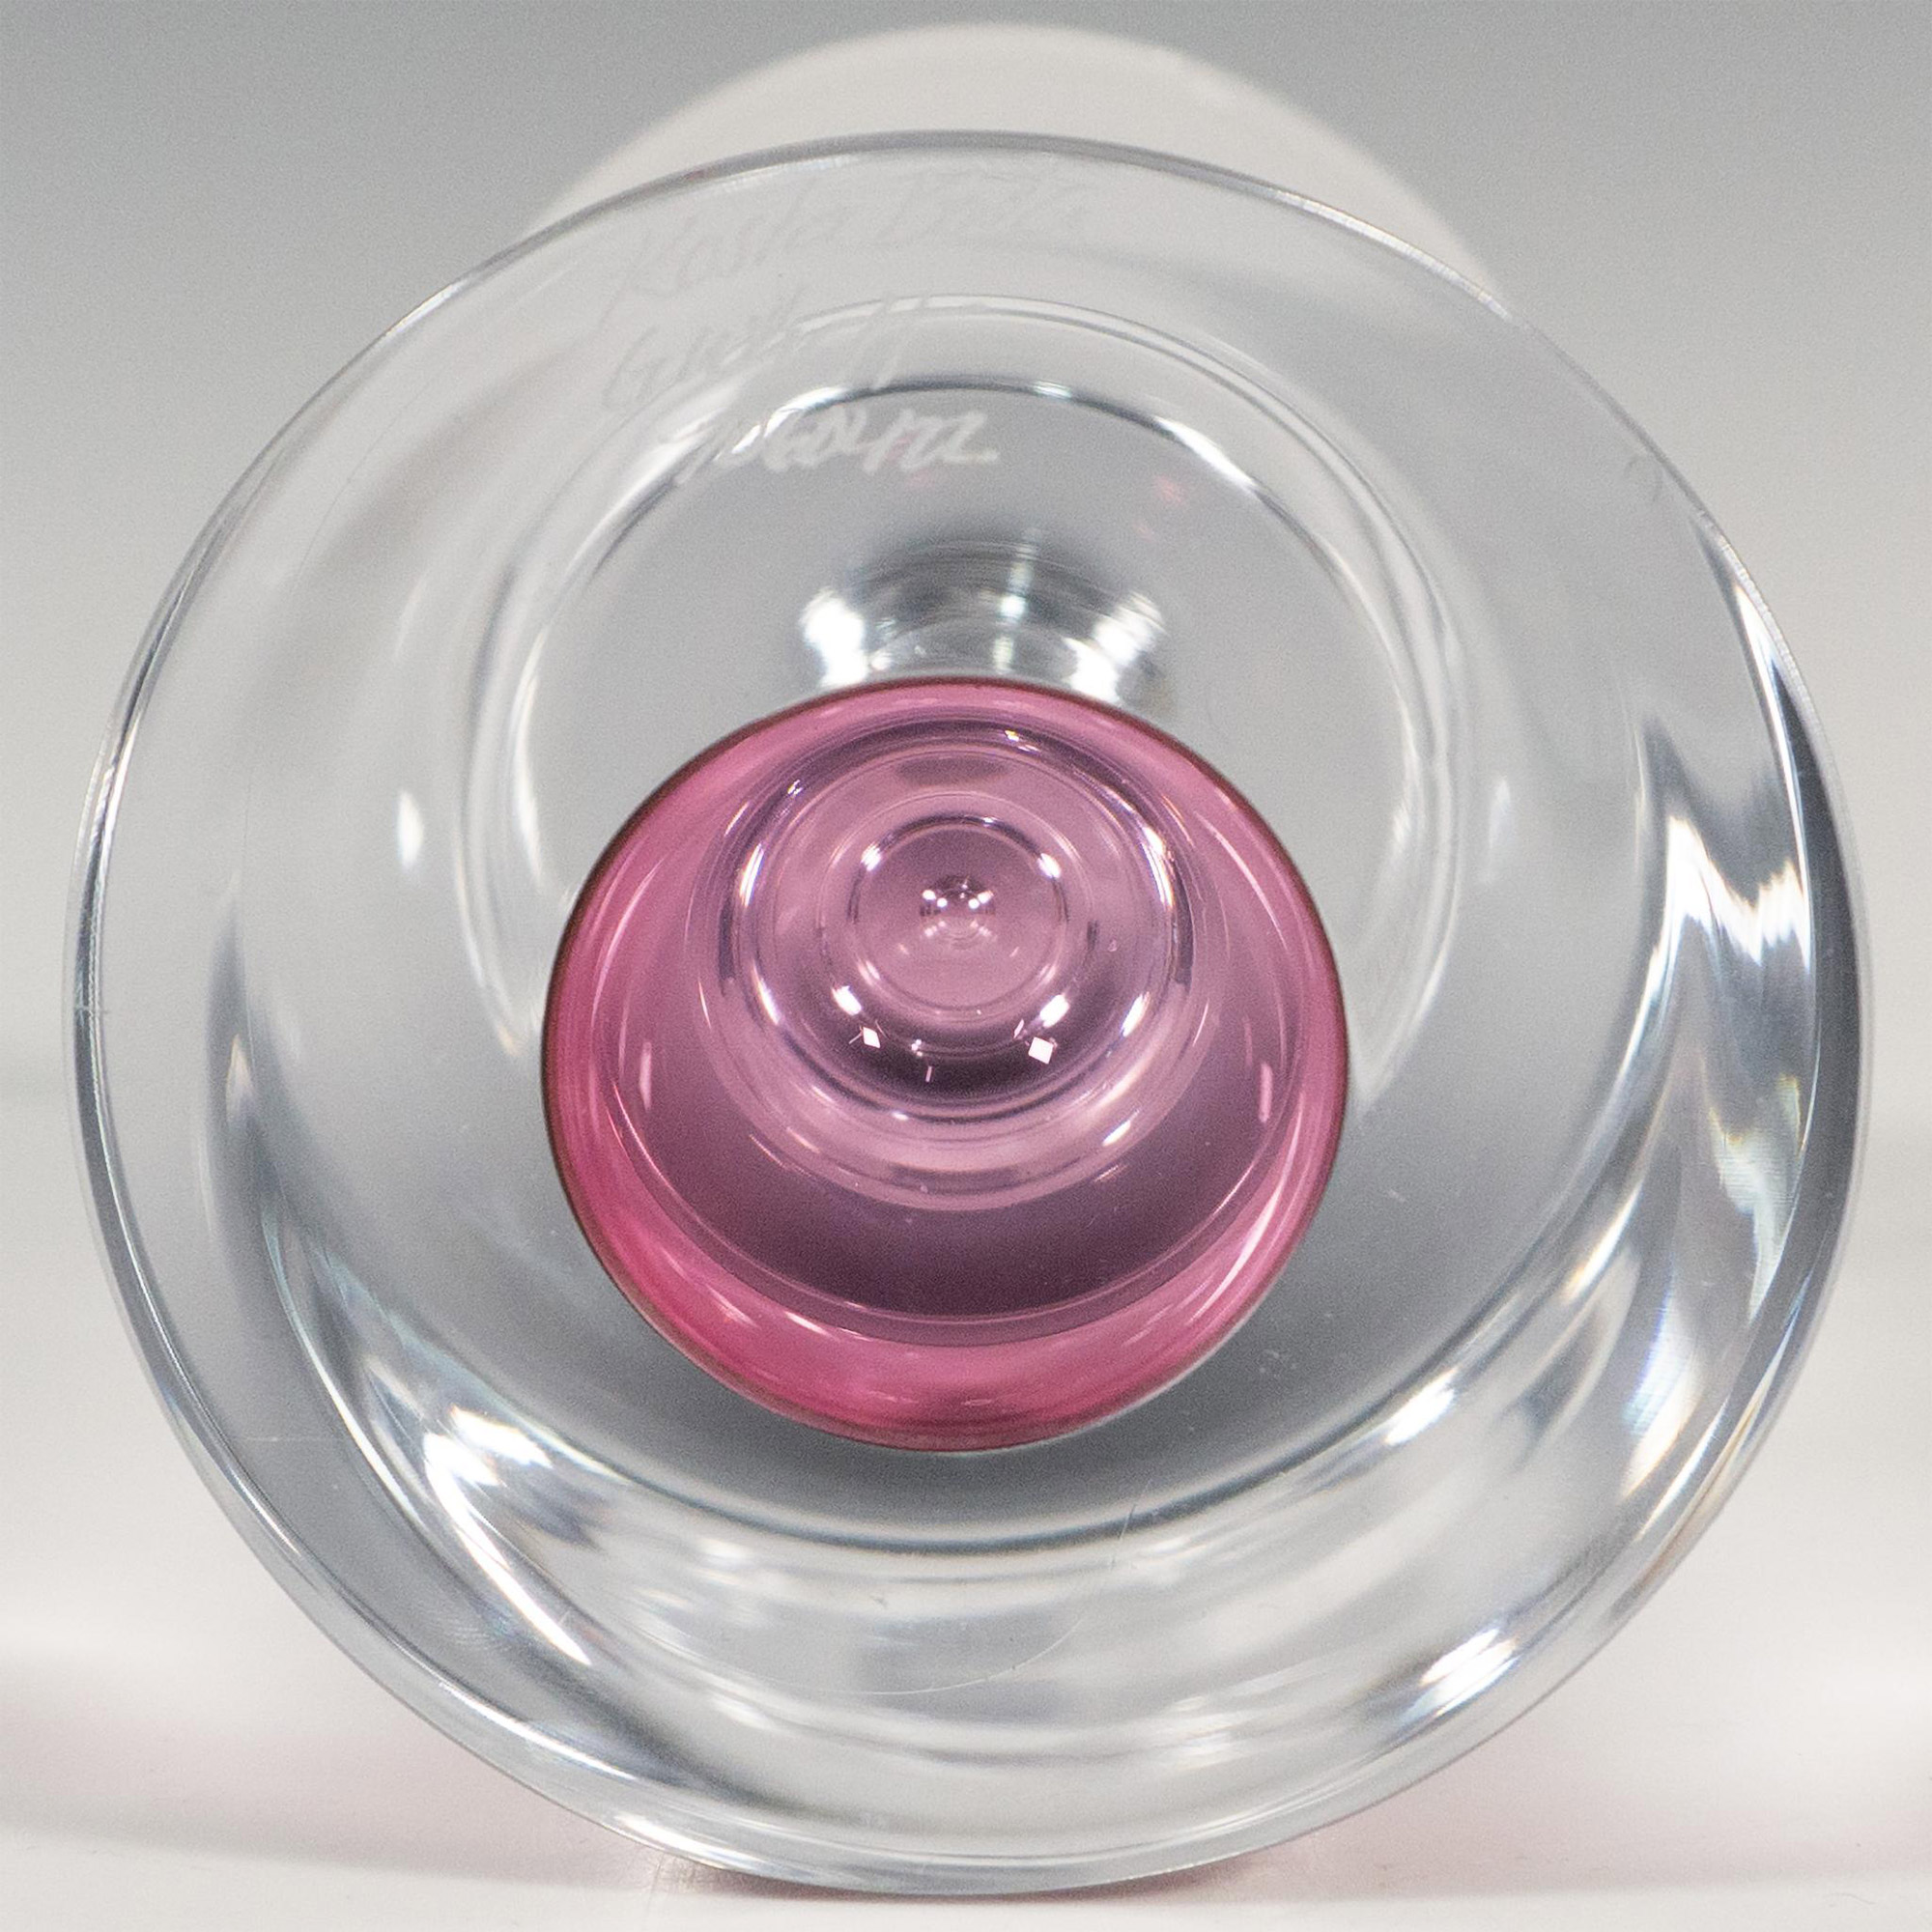 Kosta Boda by Goran Warff Glass Candlestick Holder, Zoom - Image 3 of 5